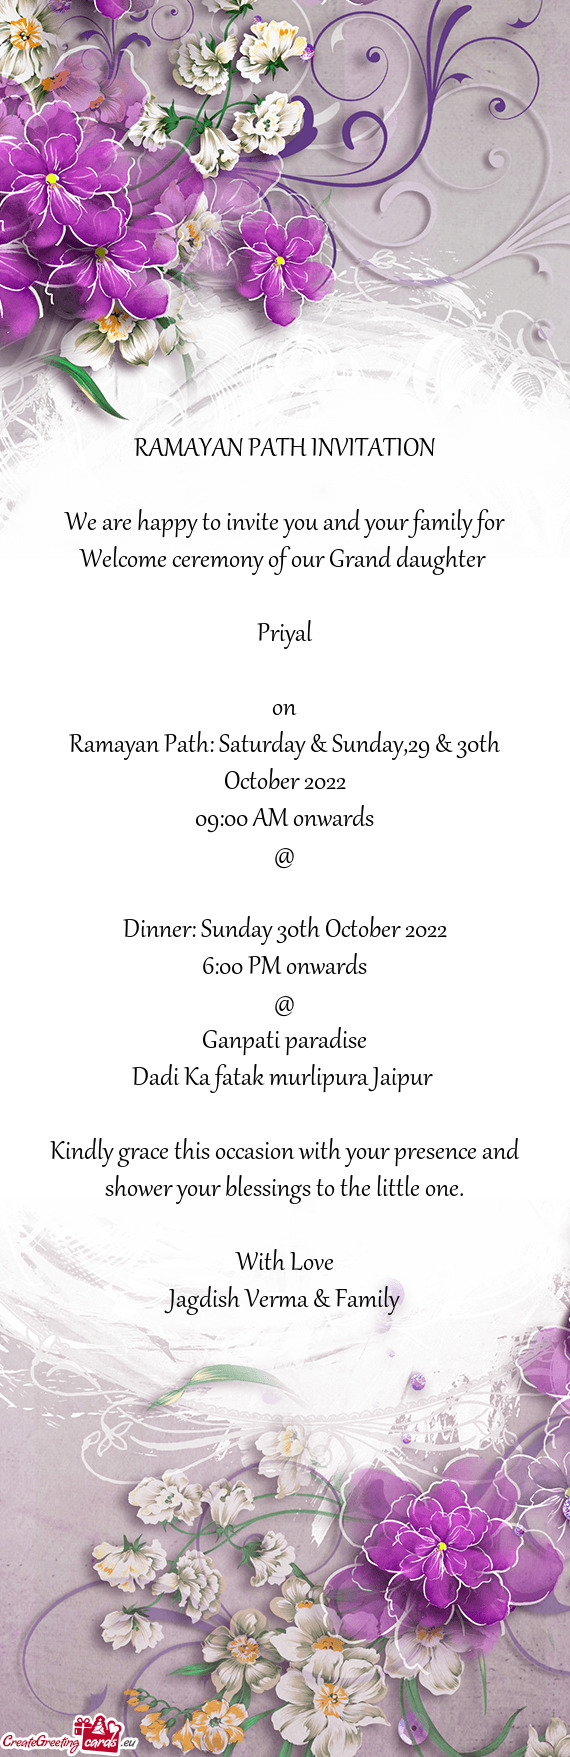 Ramayan Path: Saturday & Sunday,29 & 30th October 2022